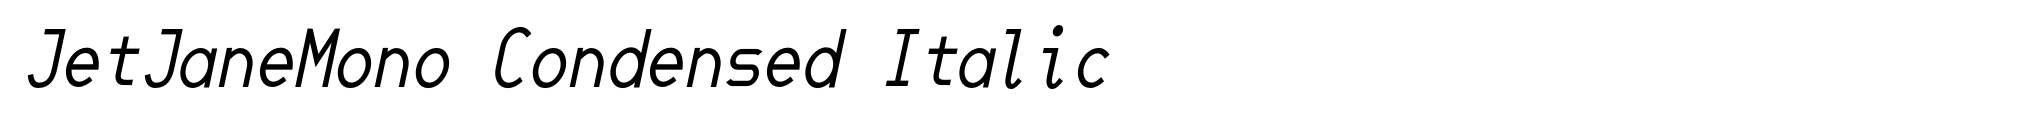 JetJaneMono Condensed Italic image